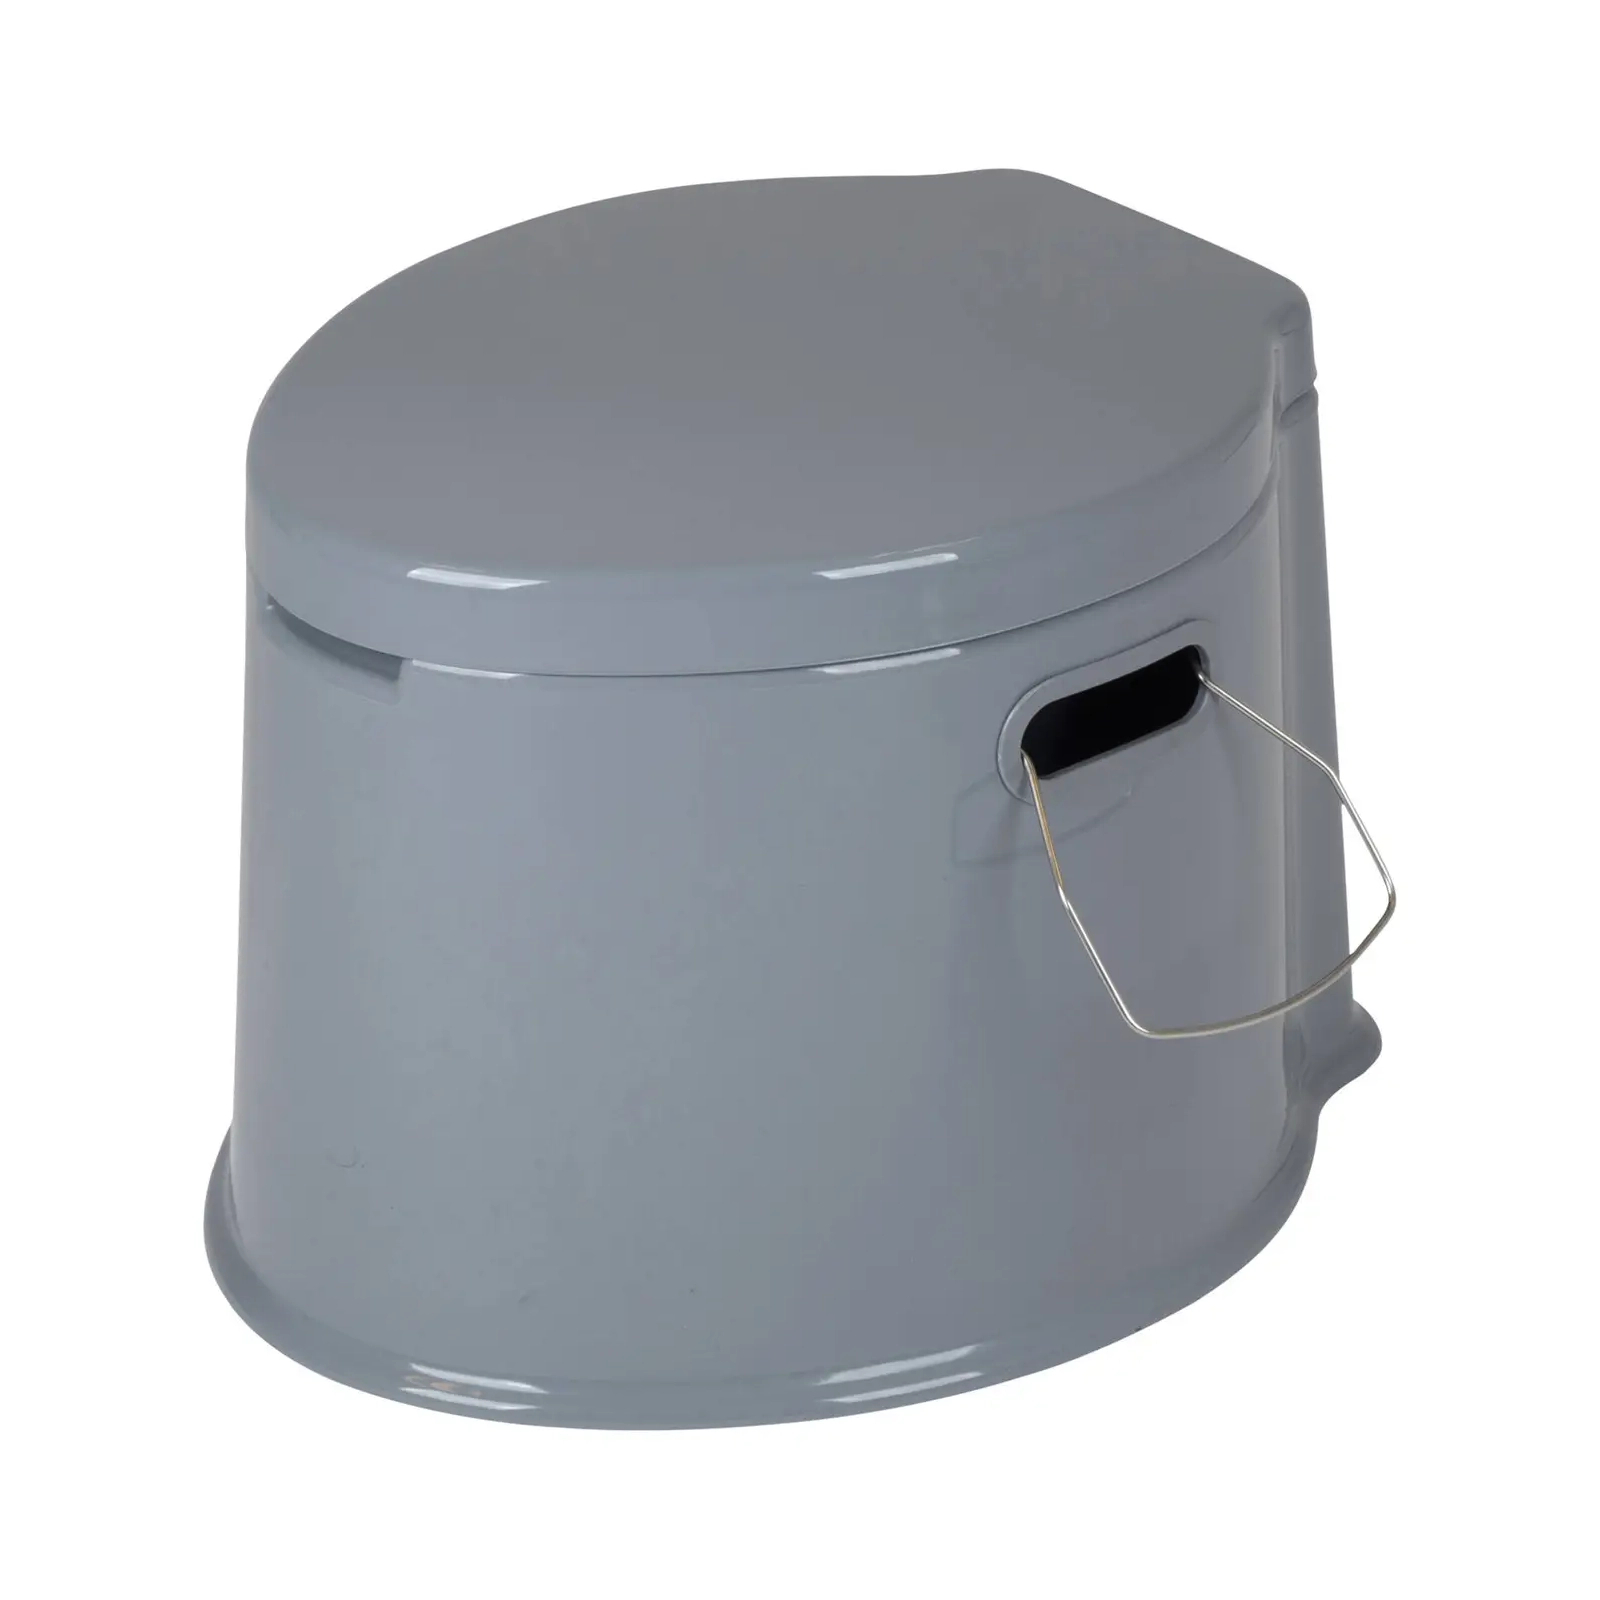 Биотуалет Bo-Camp Portable Toilet 7 Liters Grey (5502800) изображение 2